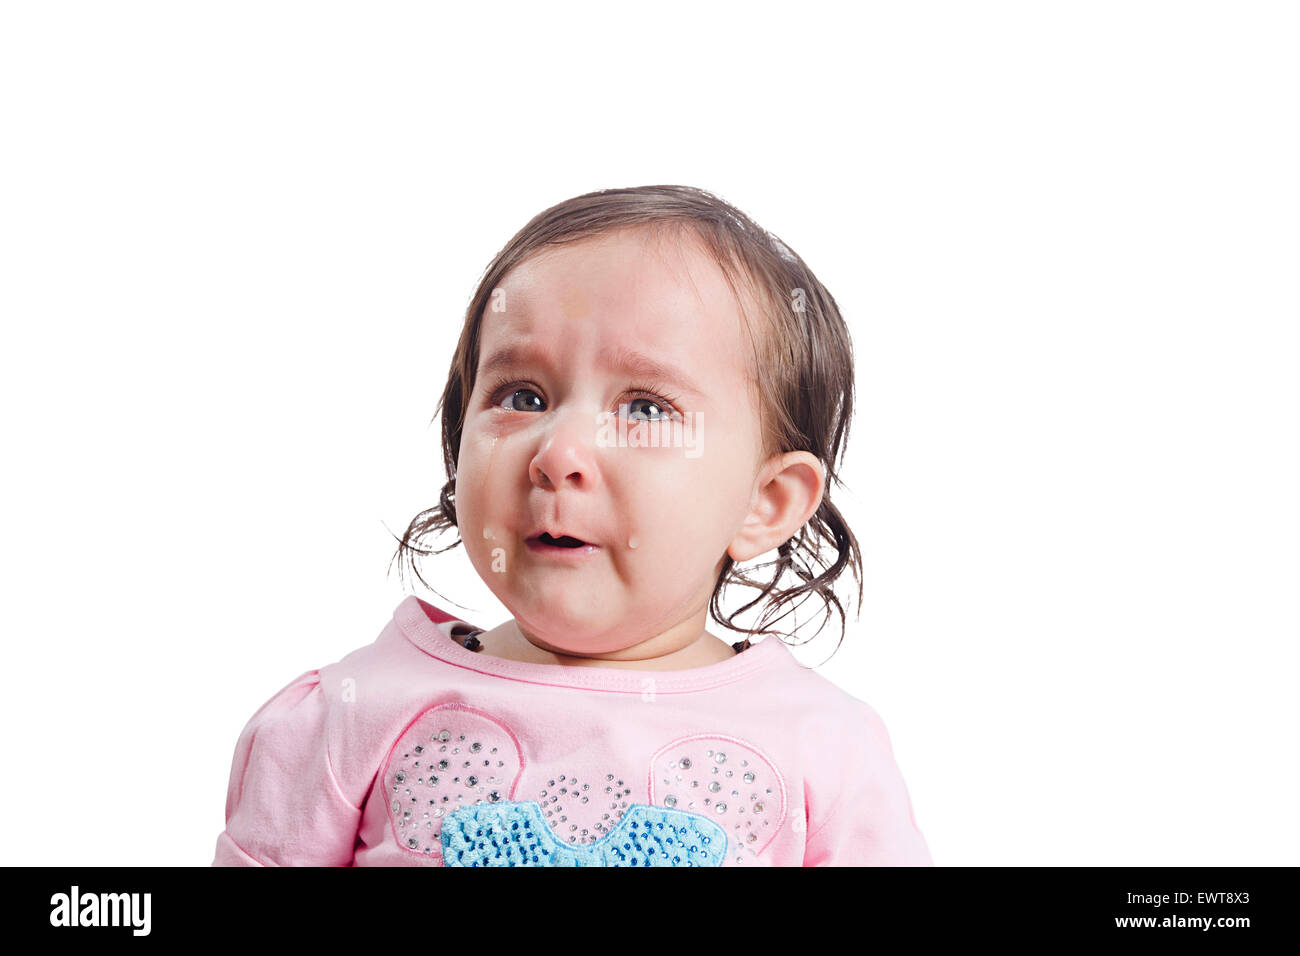 1 indian child Baby Crying Stock Photo